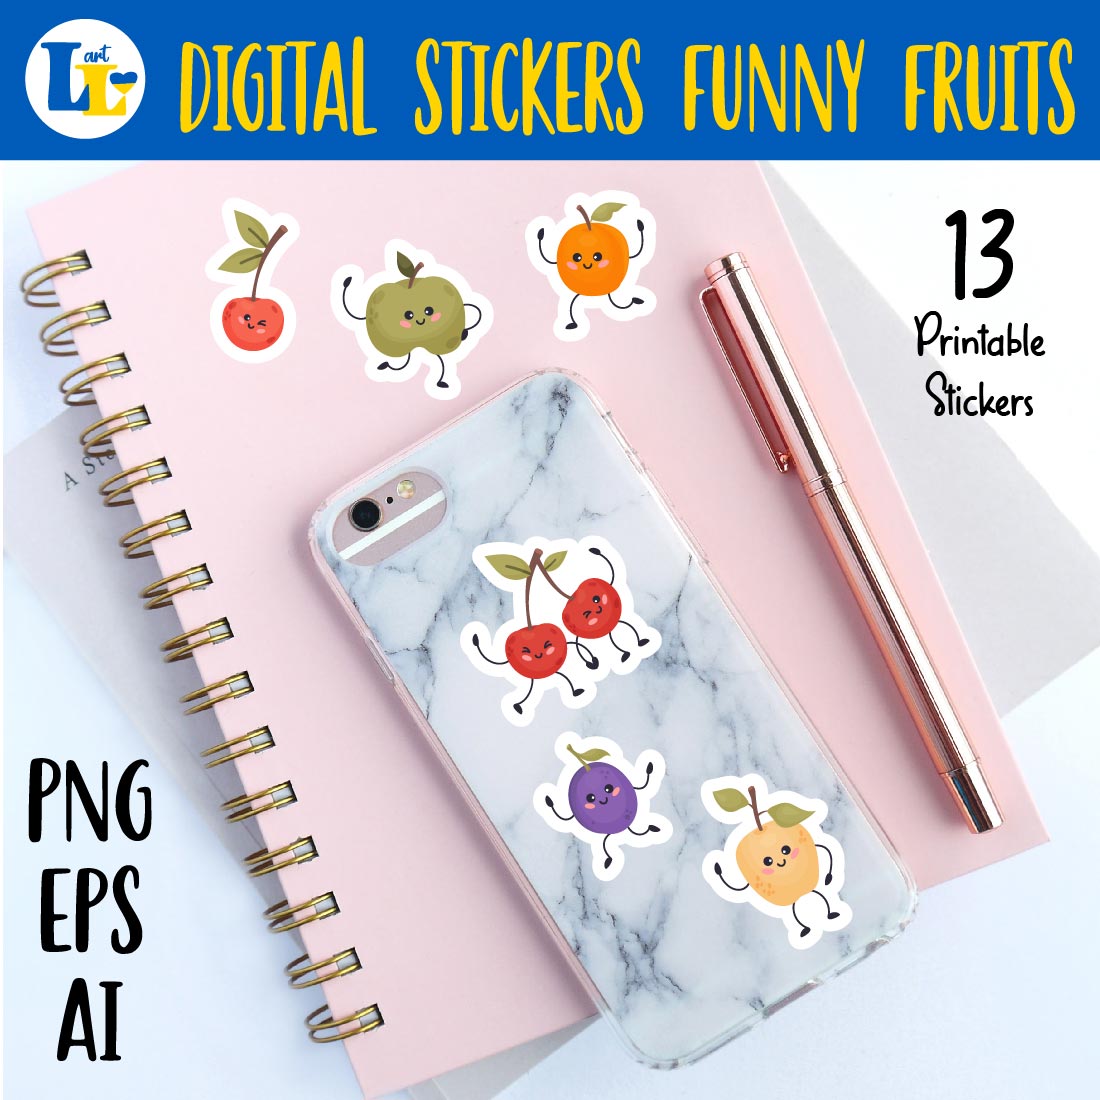 Cute fruit kawaii characters stickers bundle | 13 Printable digital sticker preview image.